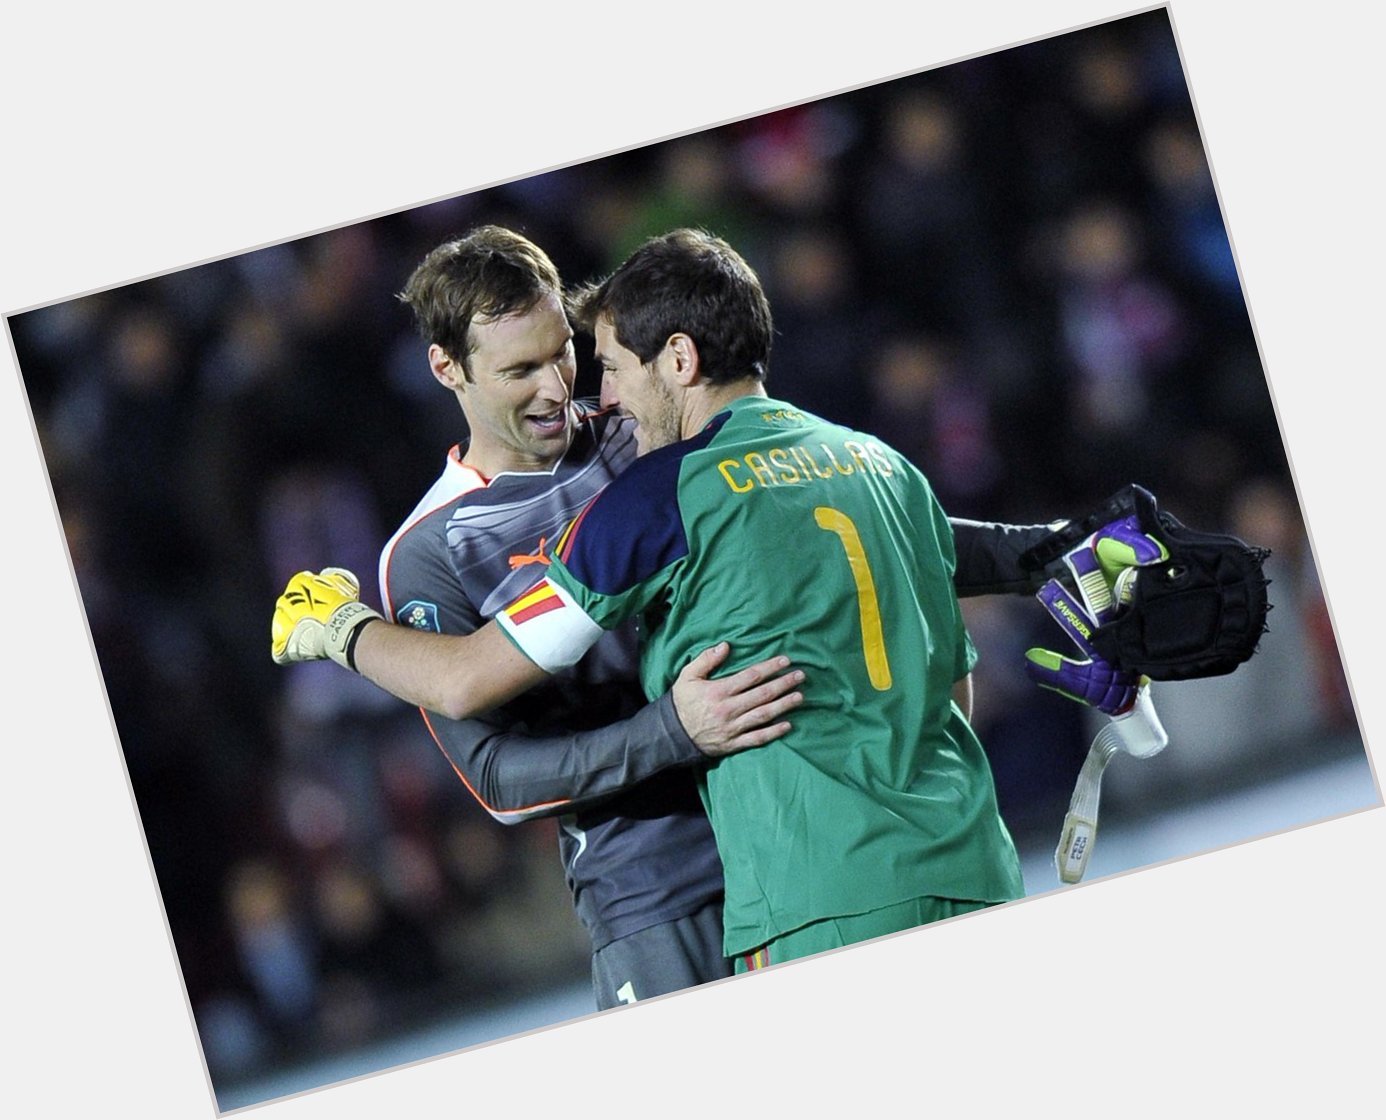 Happy birthday legendary goalkeepers Petr Cech, 33, and Iker Casillas, 34! 